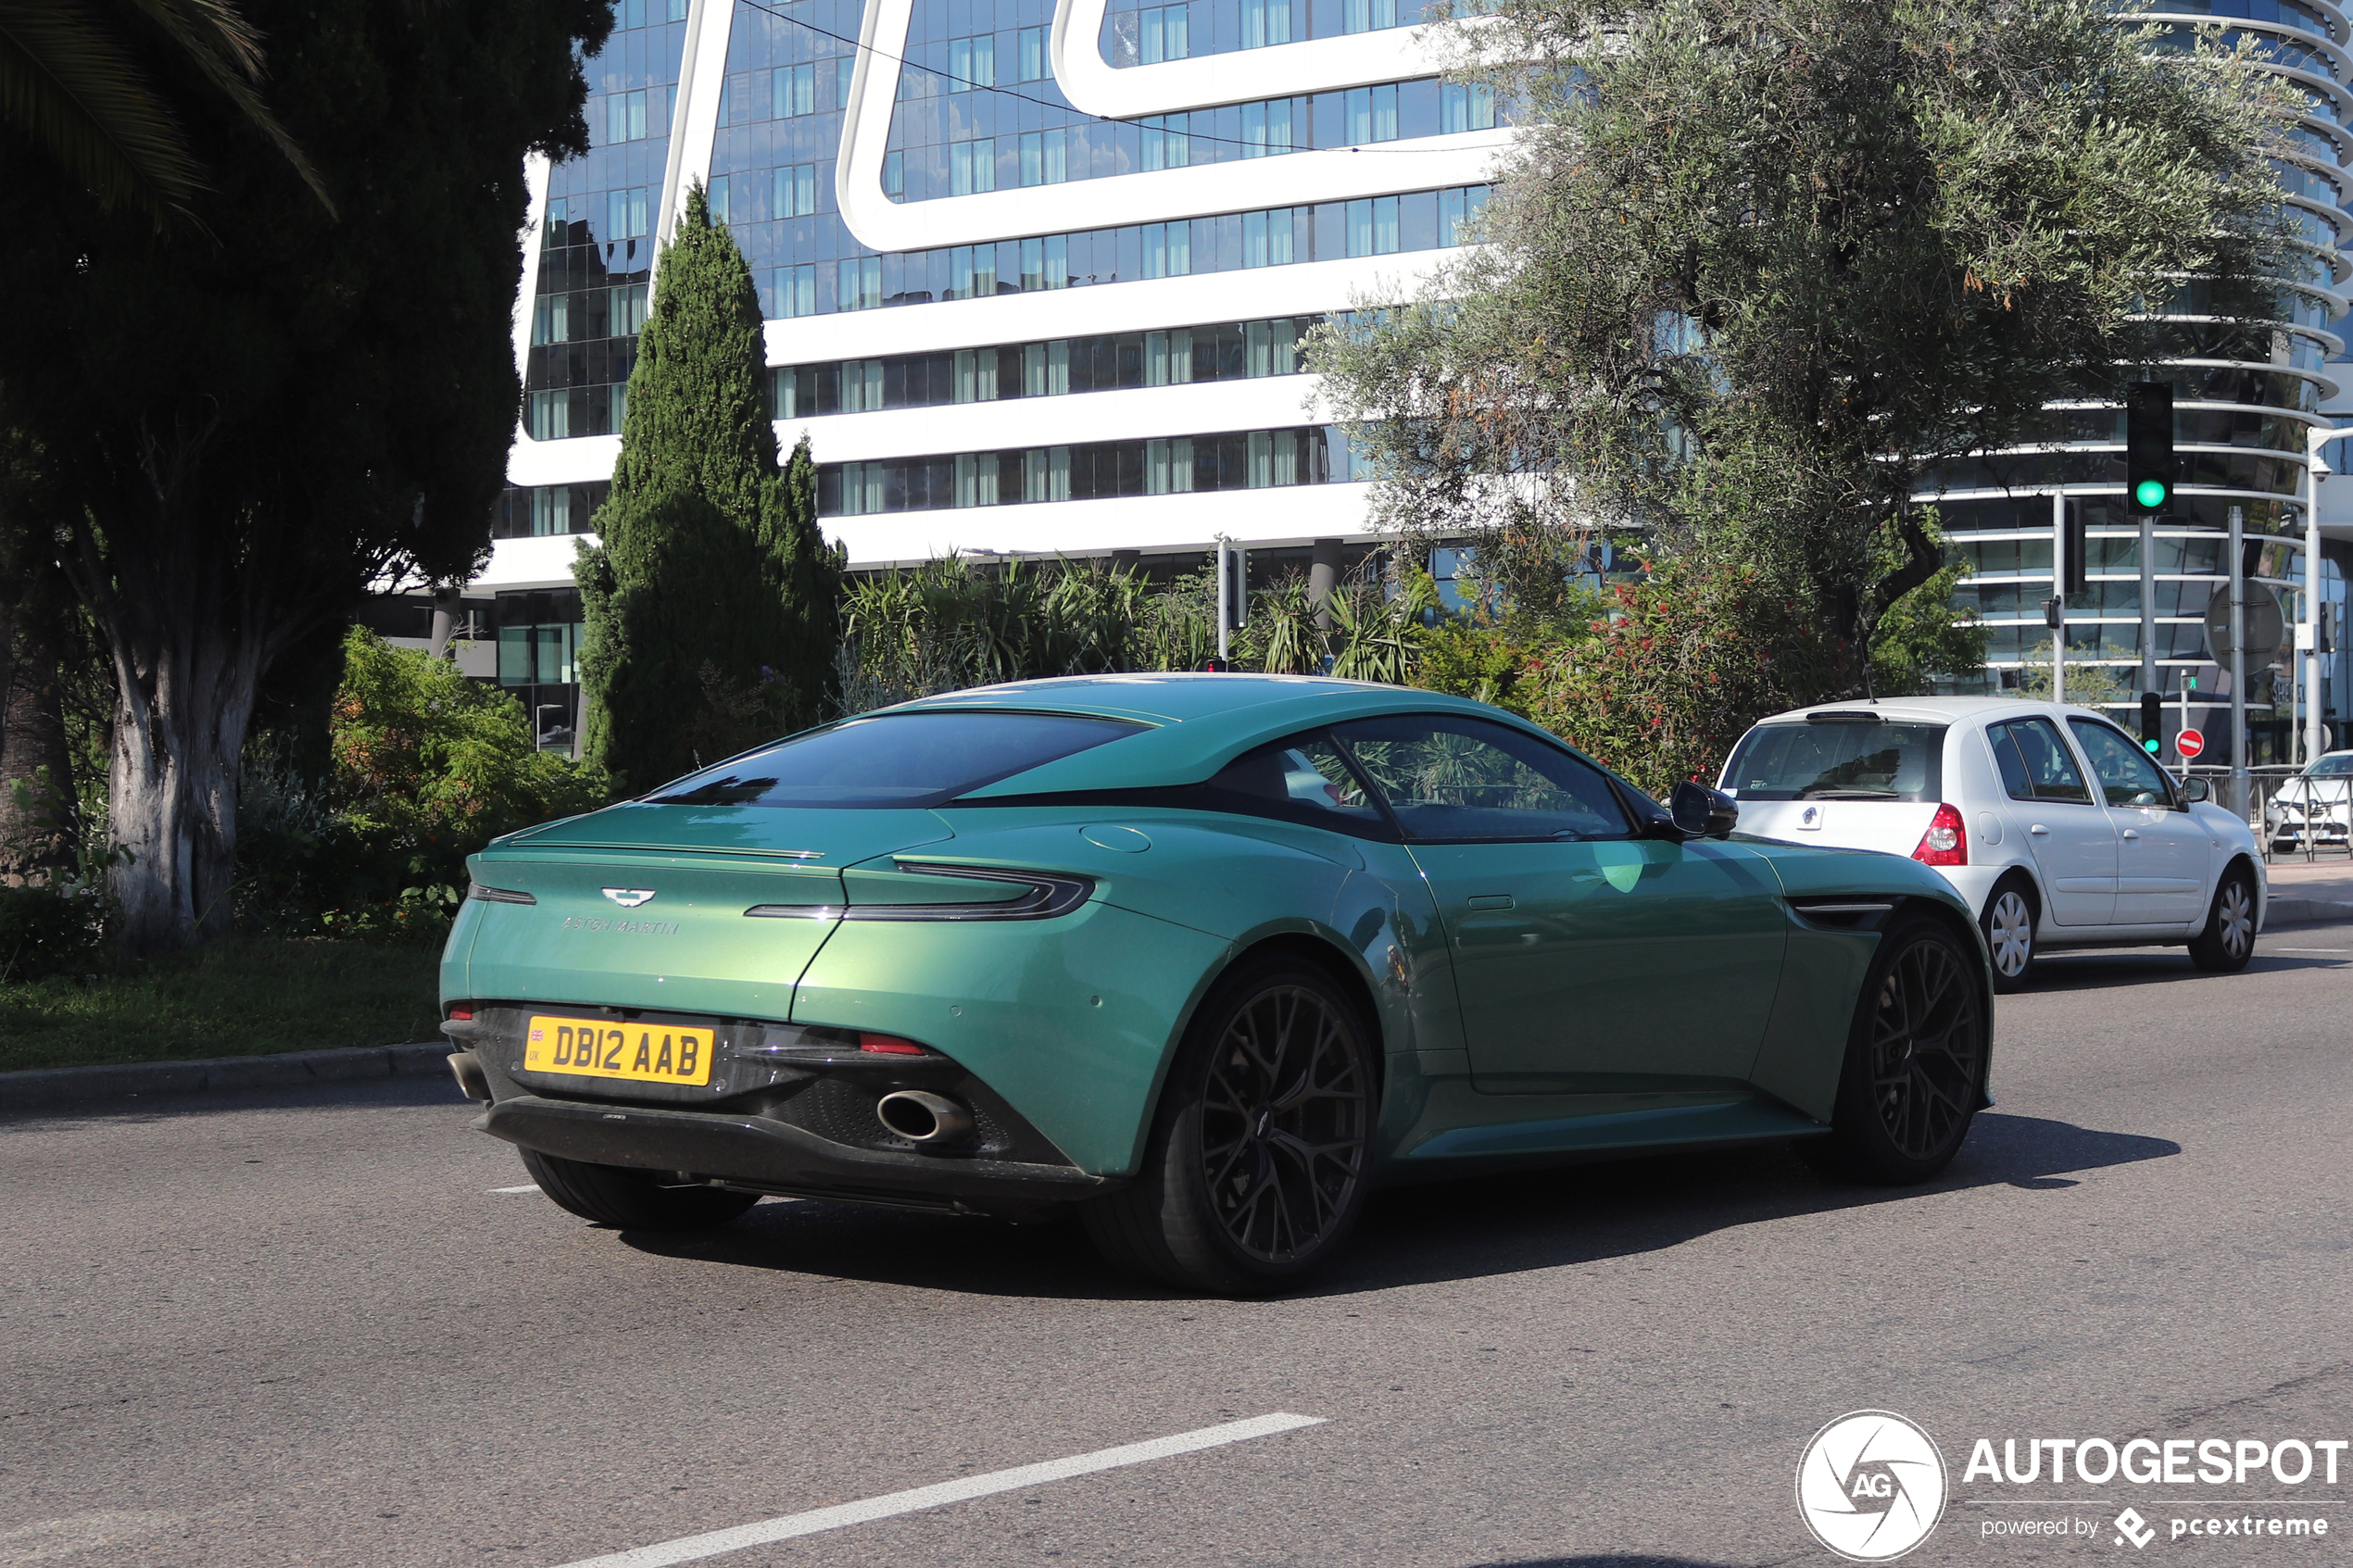 Aston Martin DB12 maakt zijn debuut in Nice